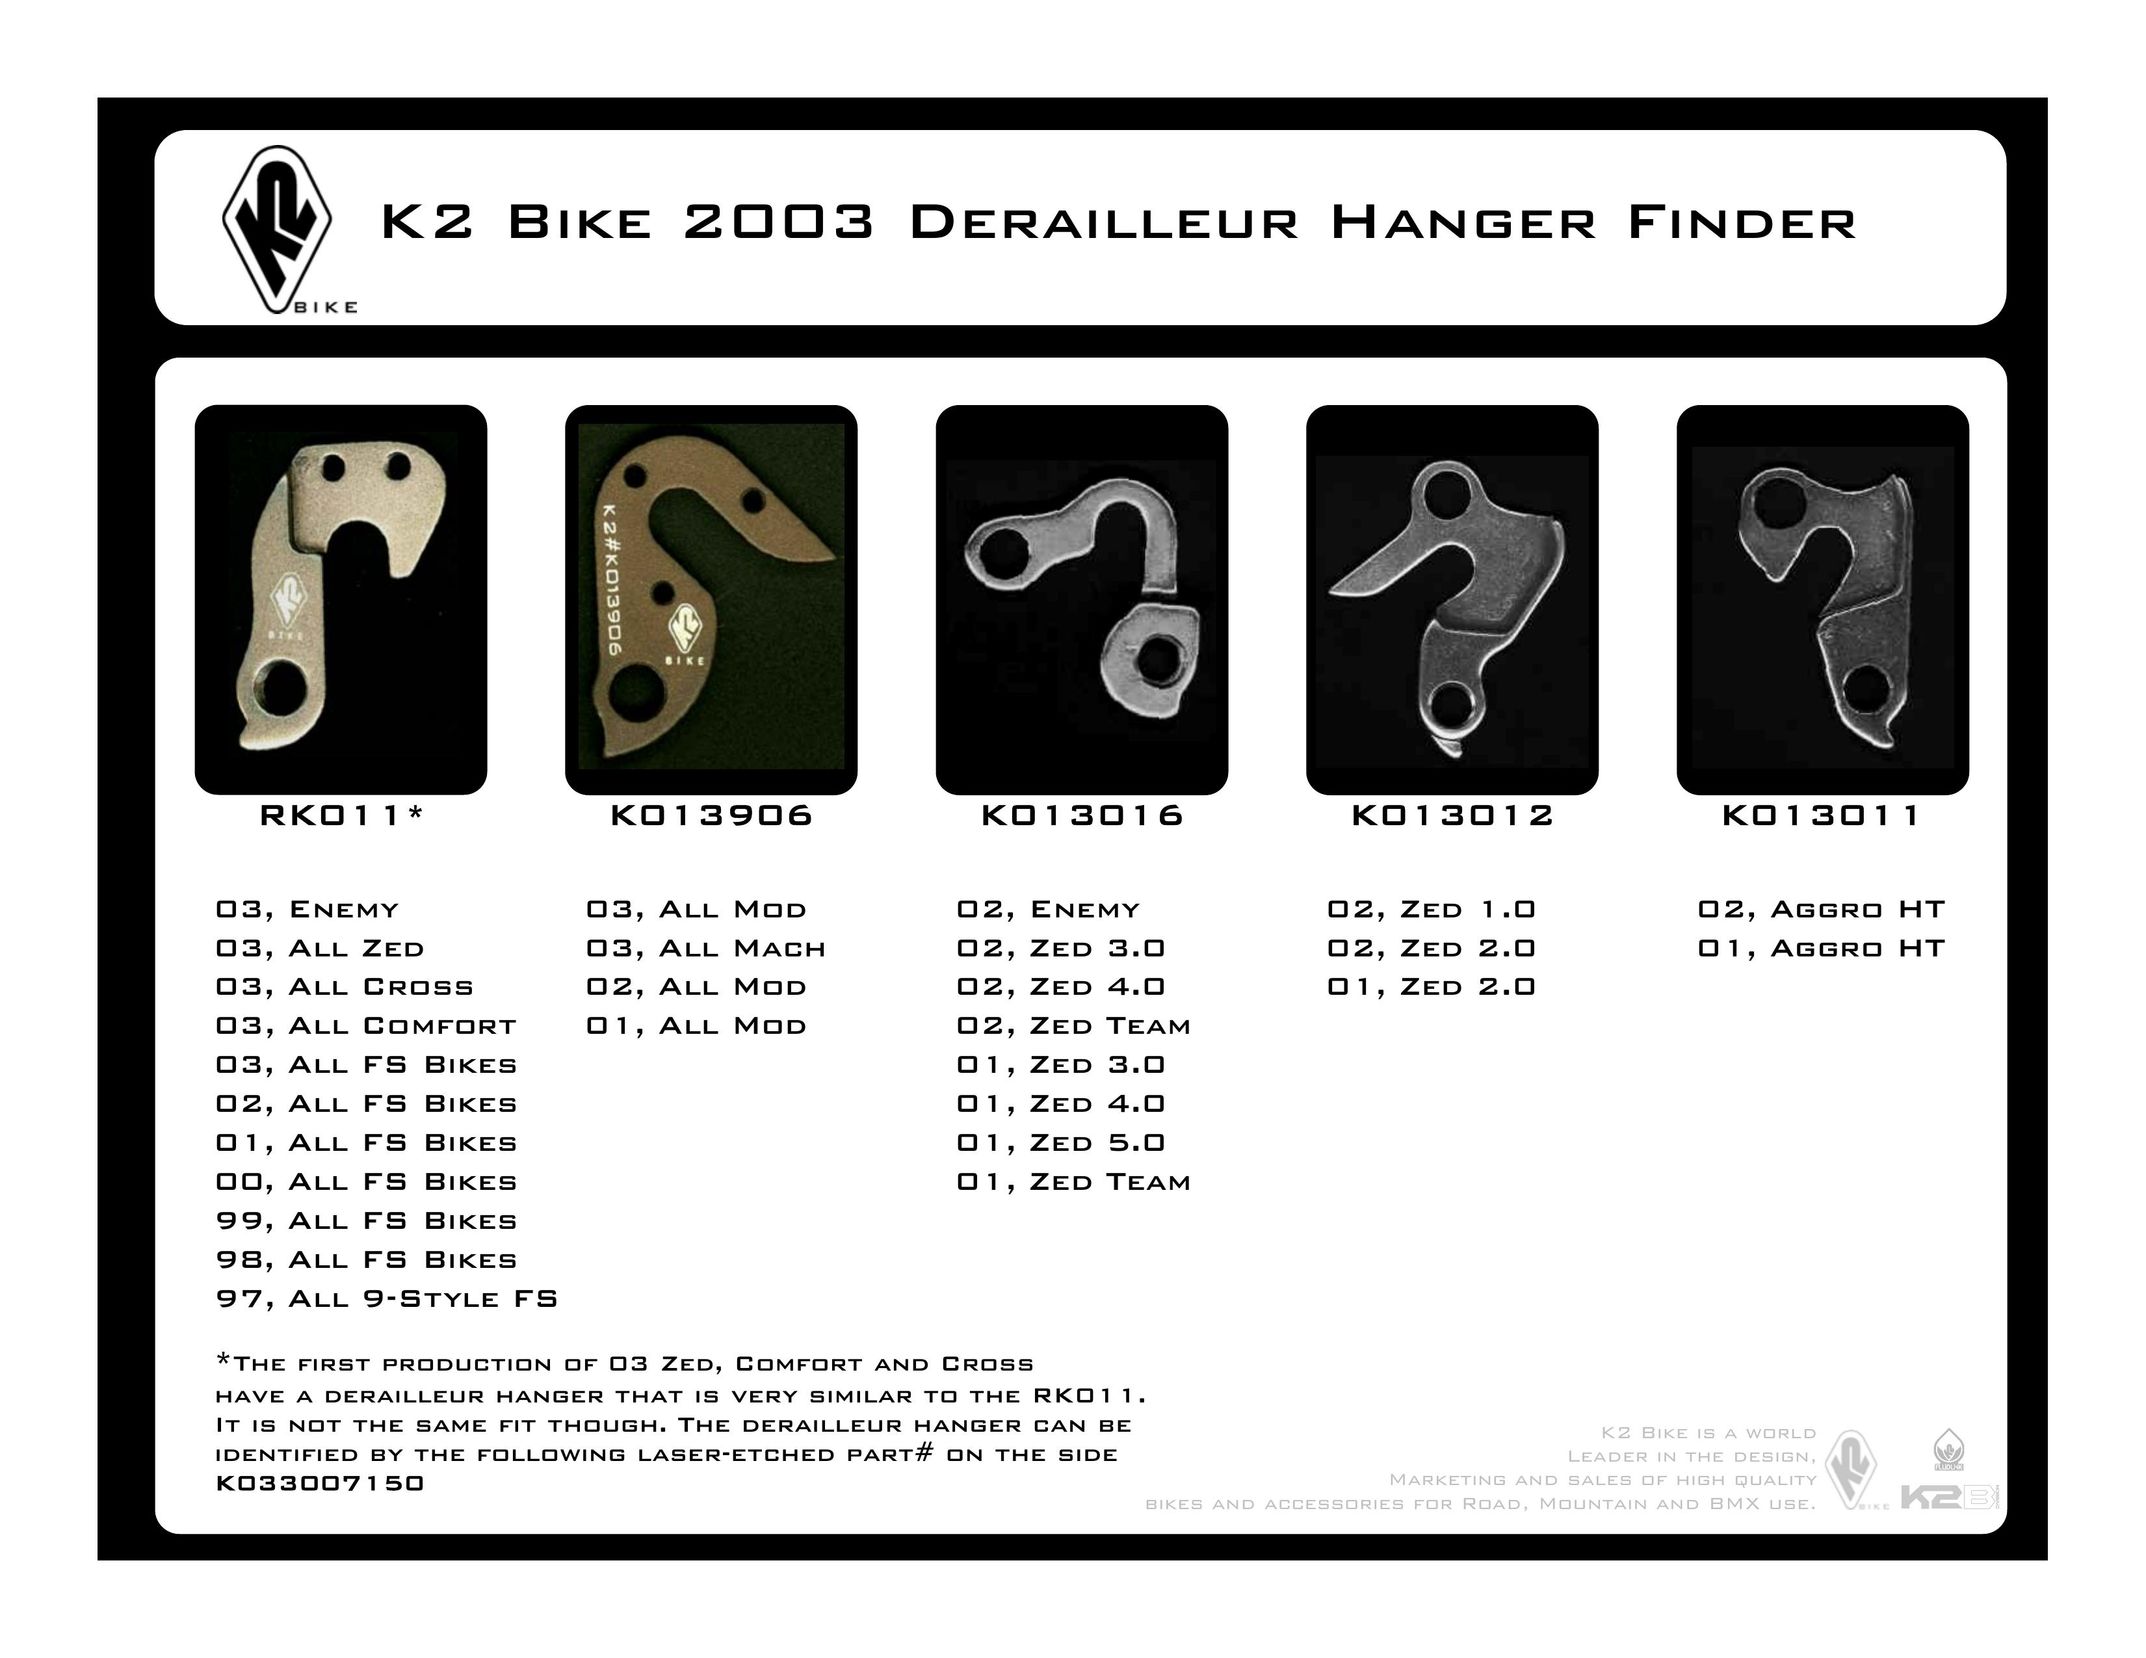 K2 Bike K013906 Bicycle Accessories User Manual